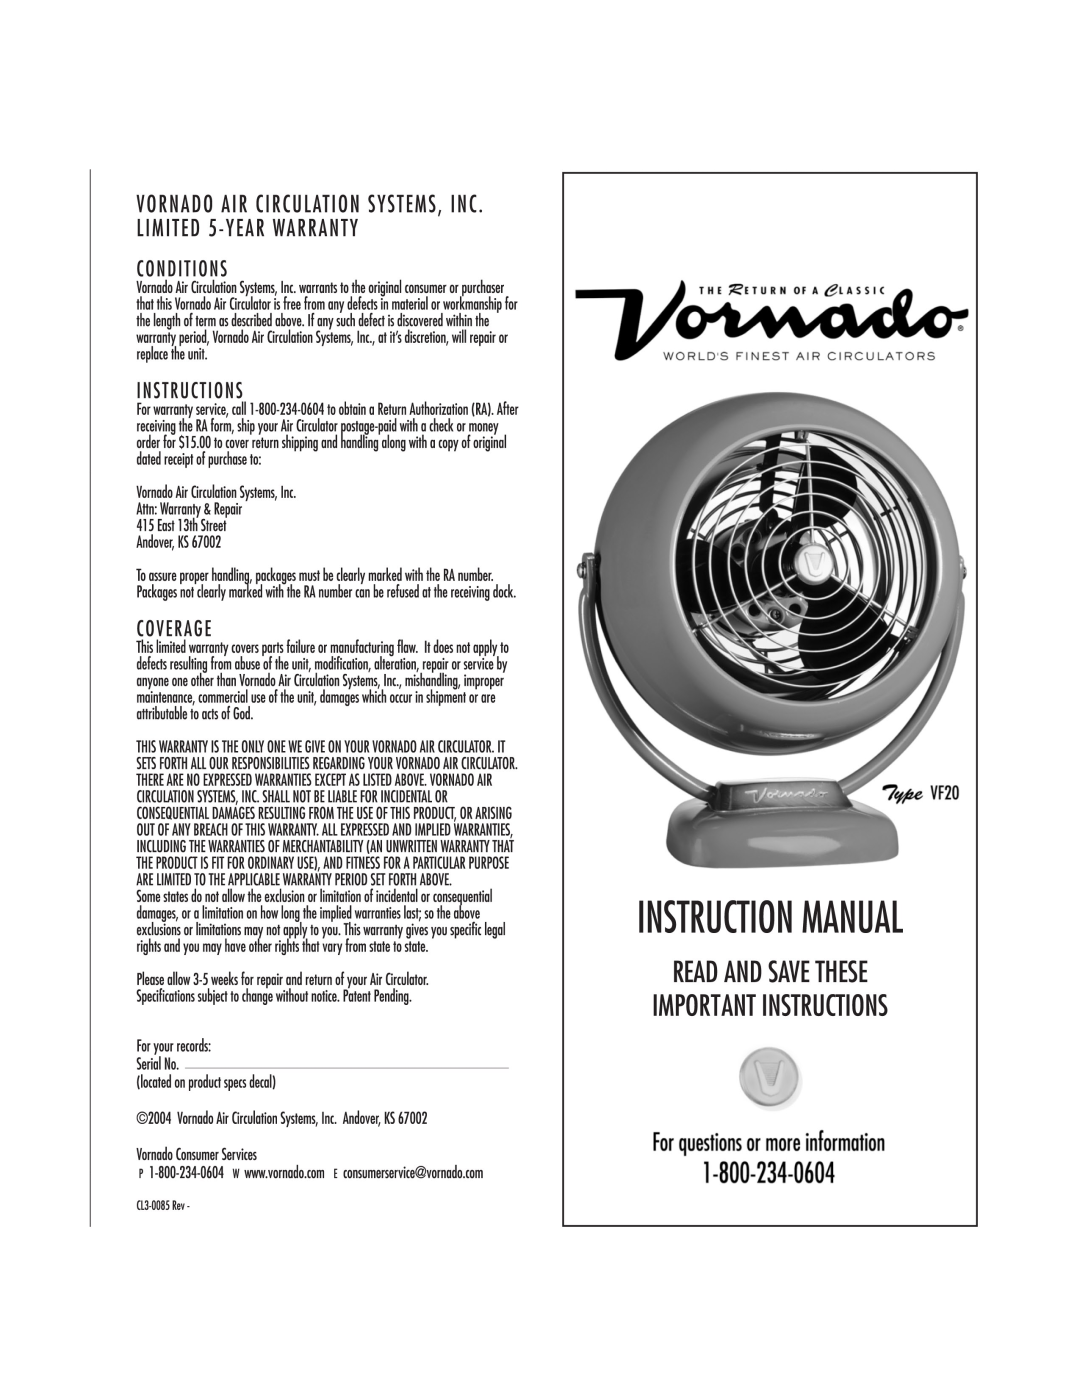 Vornado Type VF20 manual 